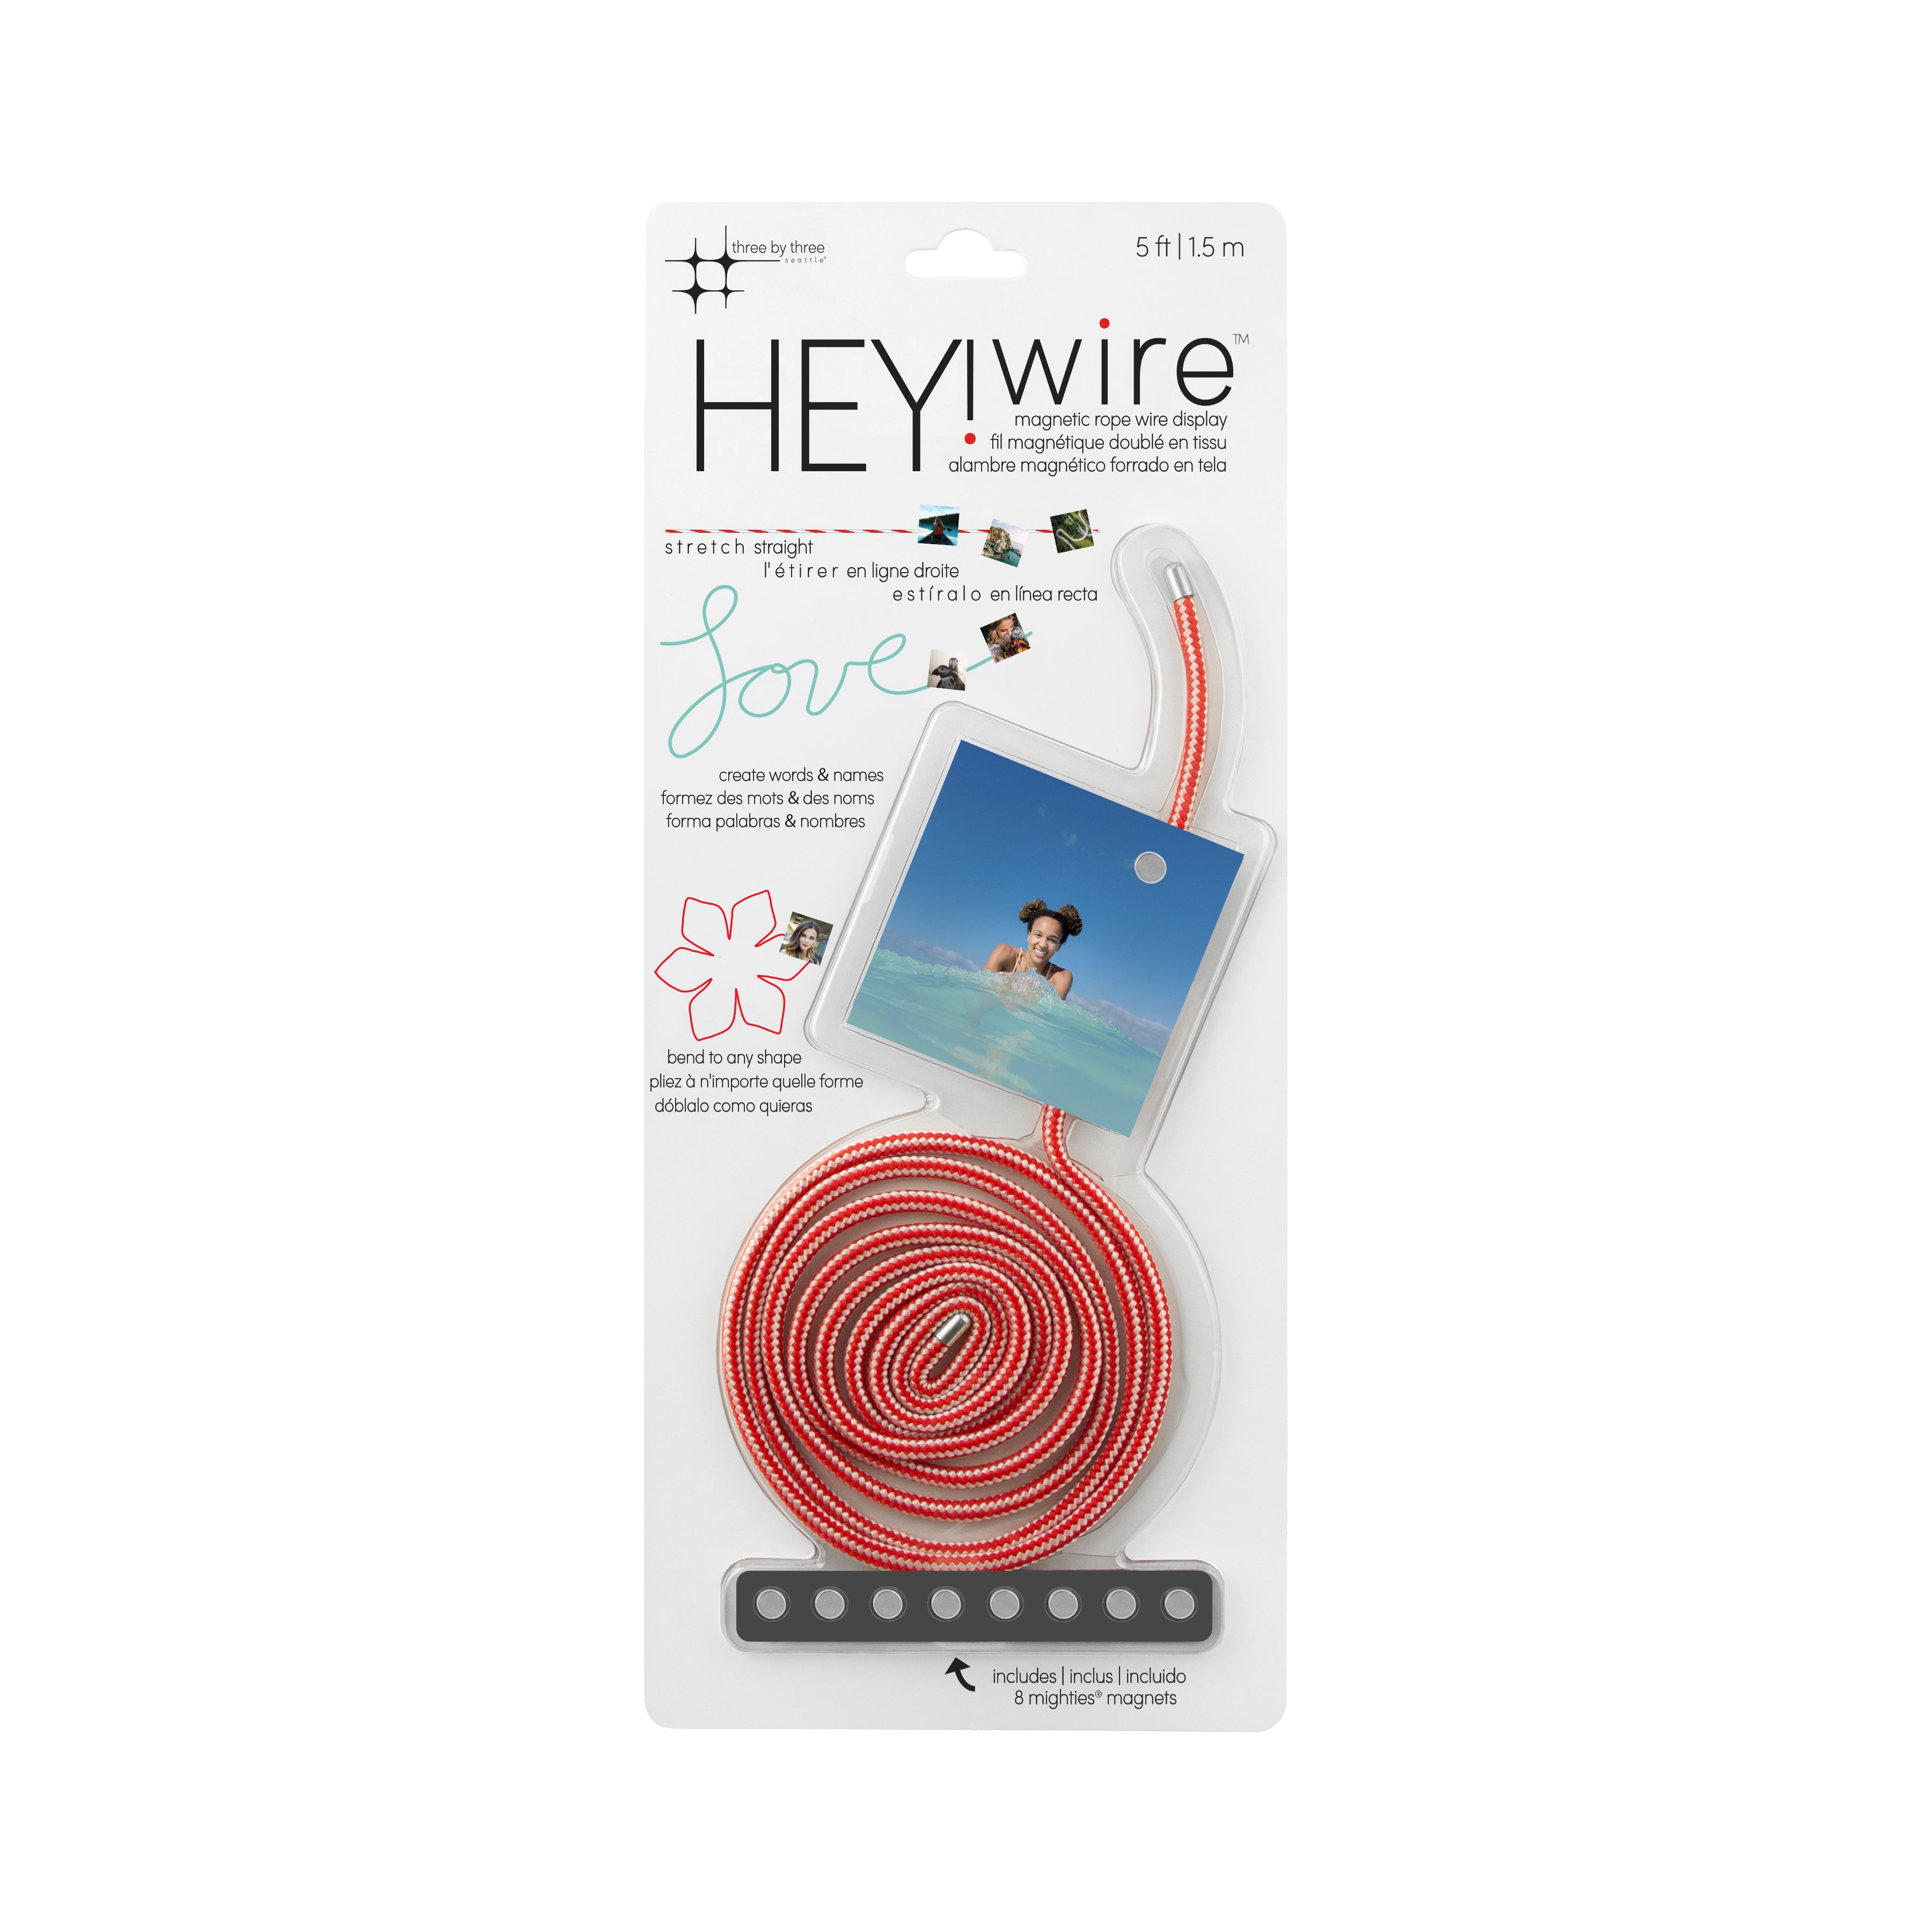 HEYwire – three by three seattle